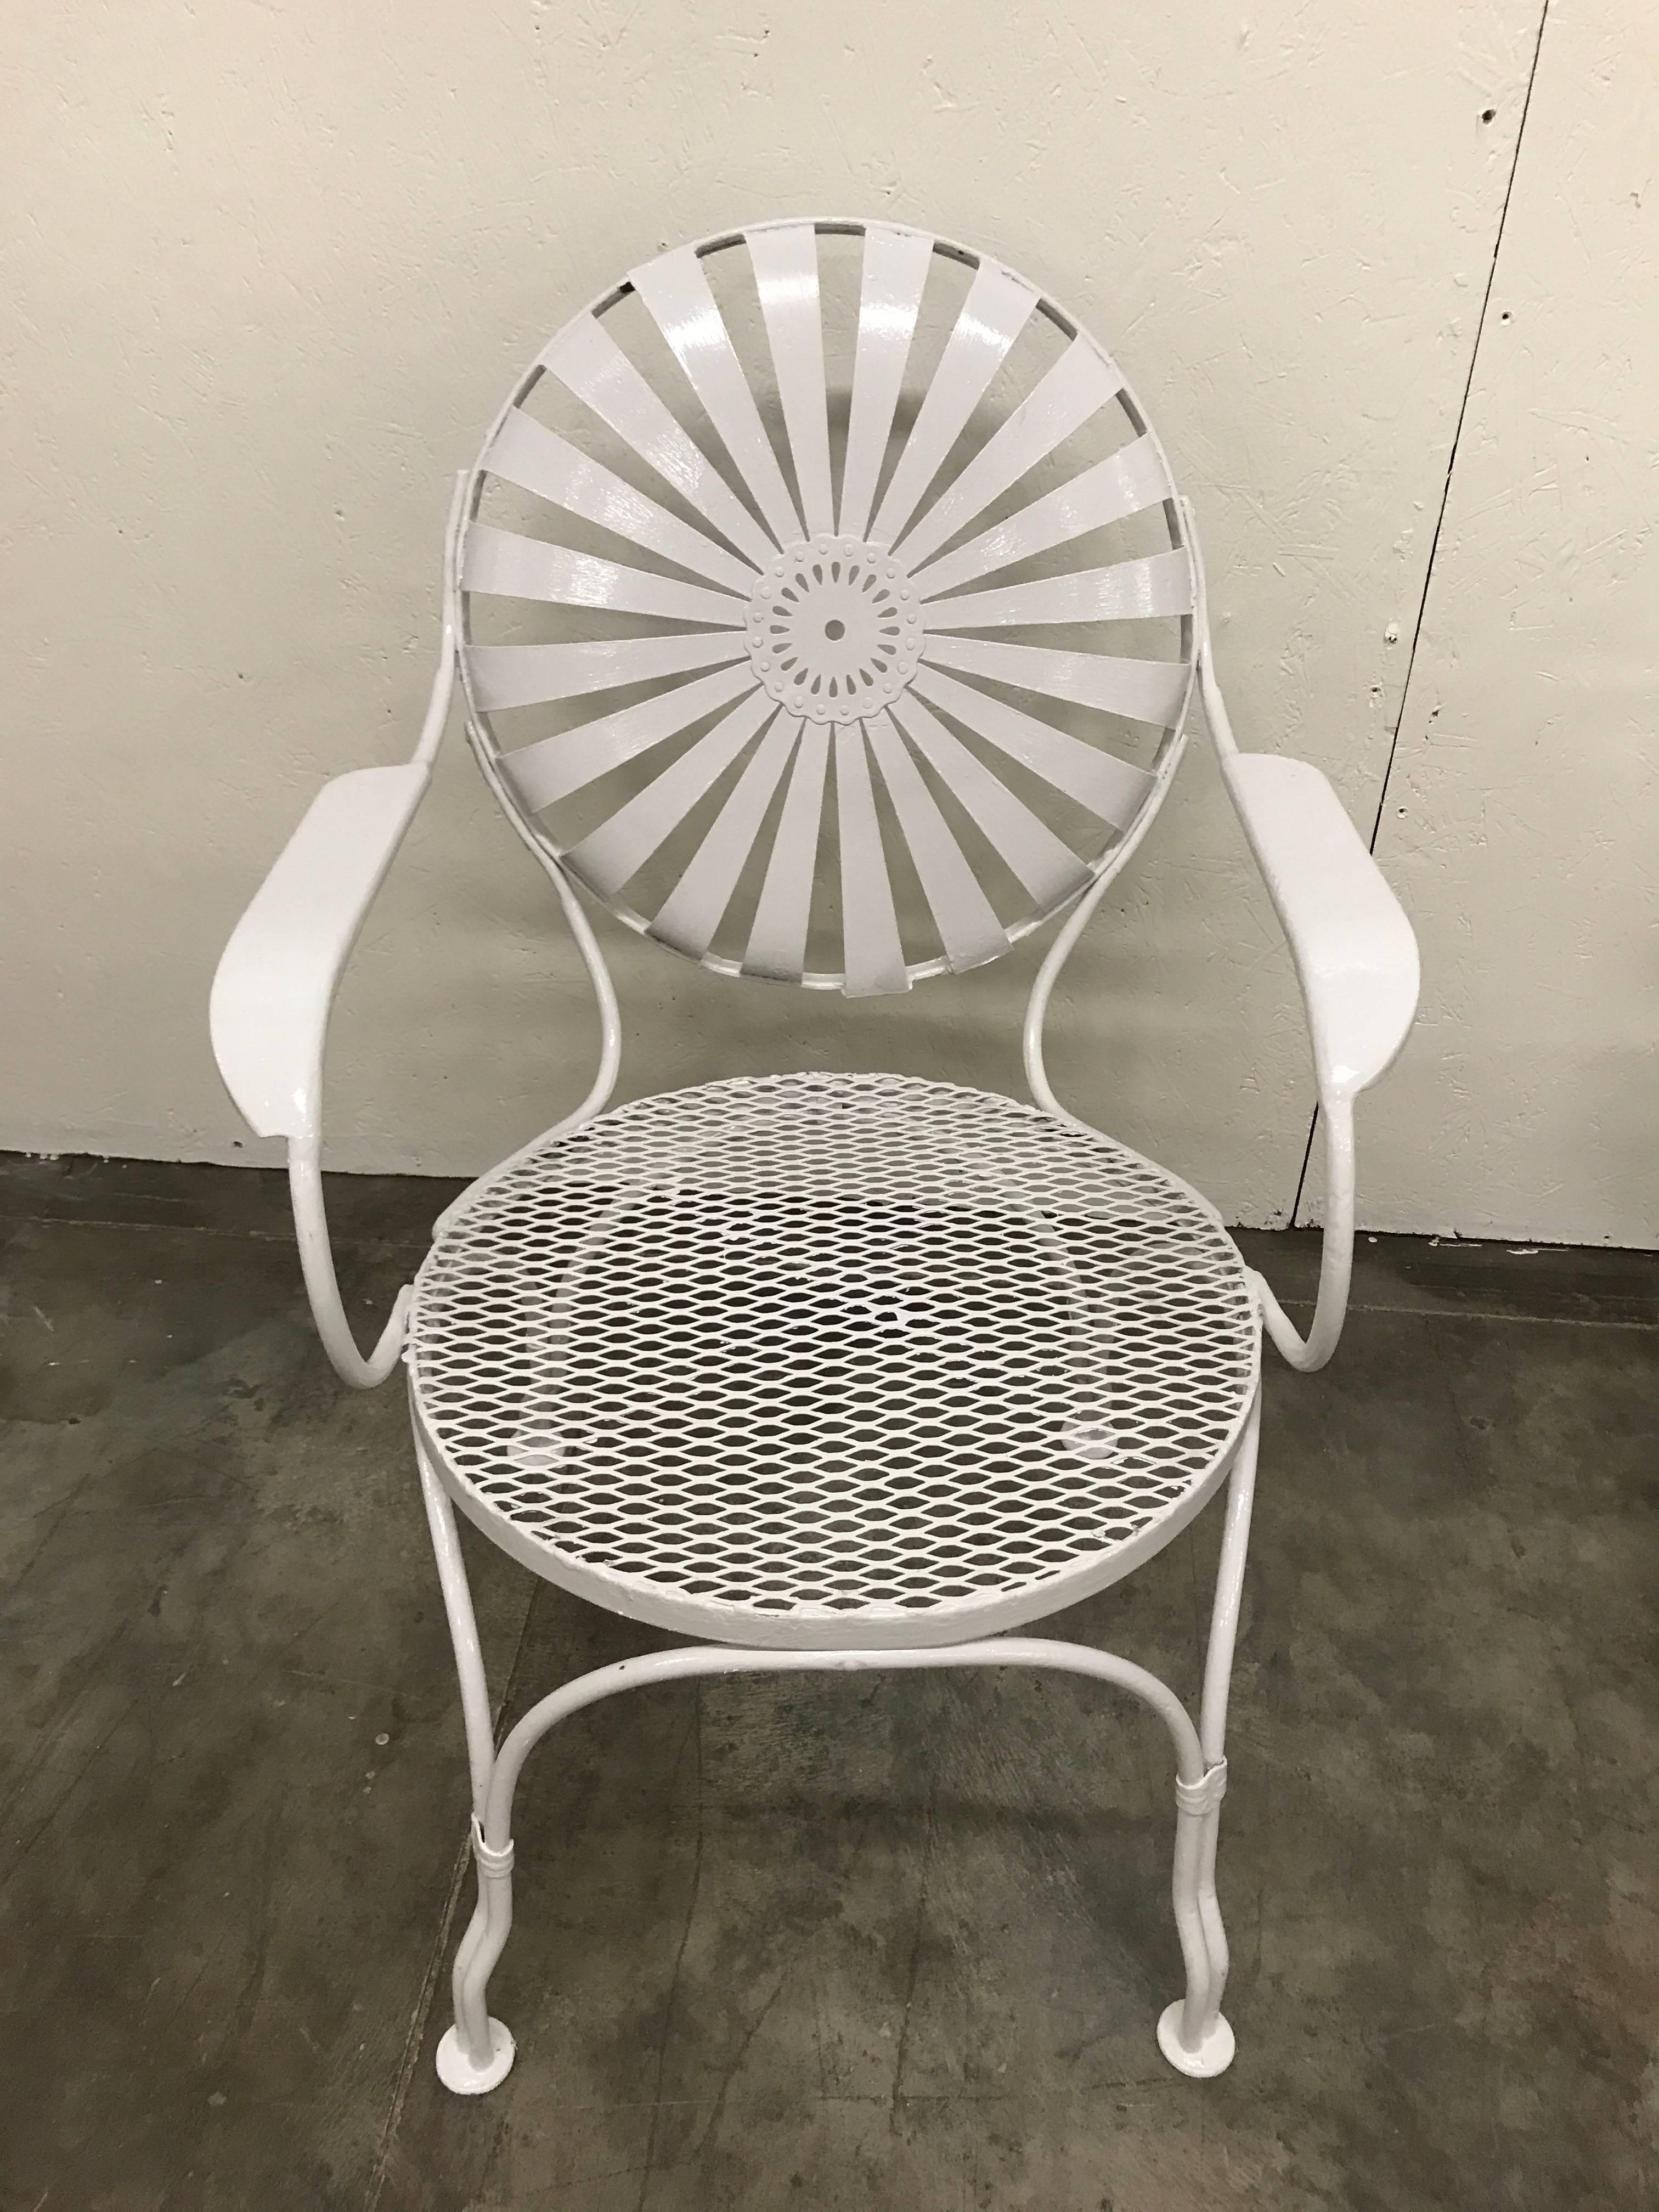 sunburst chairs for sale